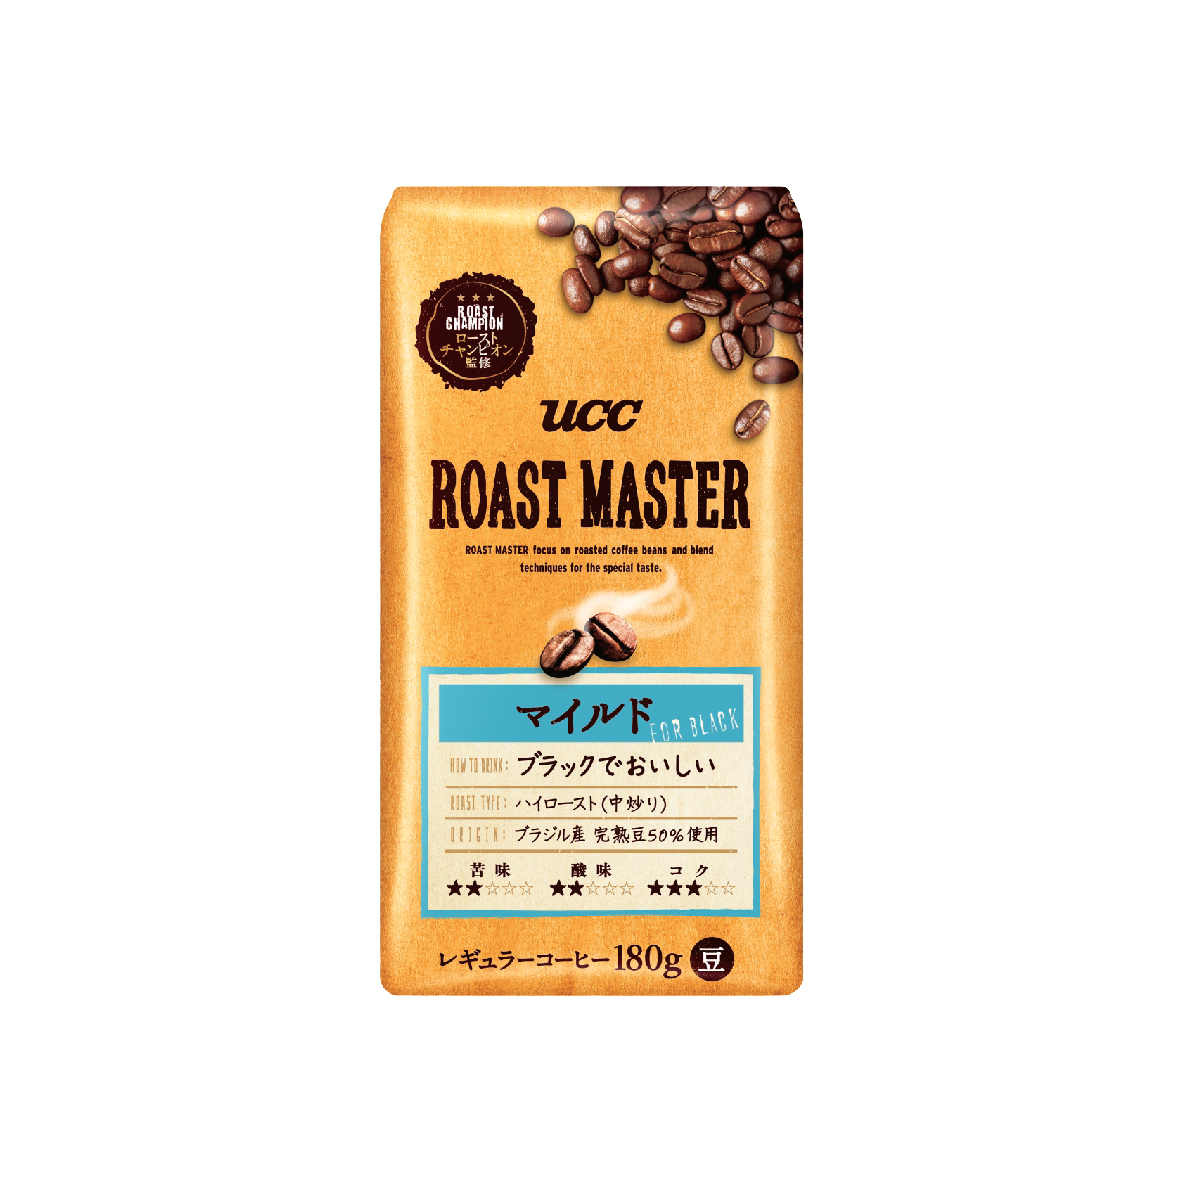 UCC Roast Master Mild Coffee Blend Roasted Coffee Beans